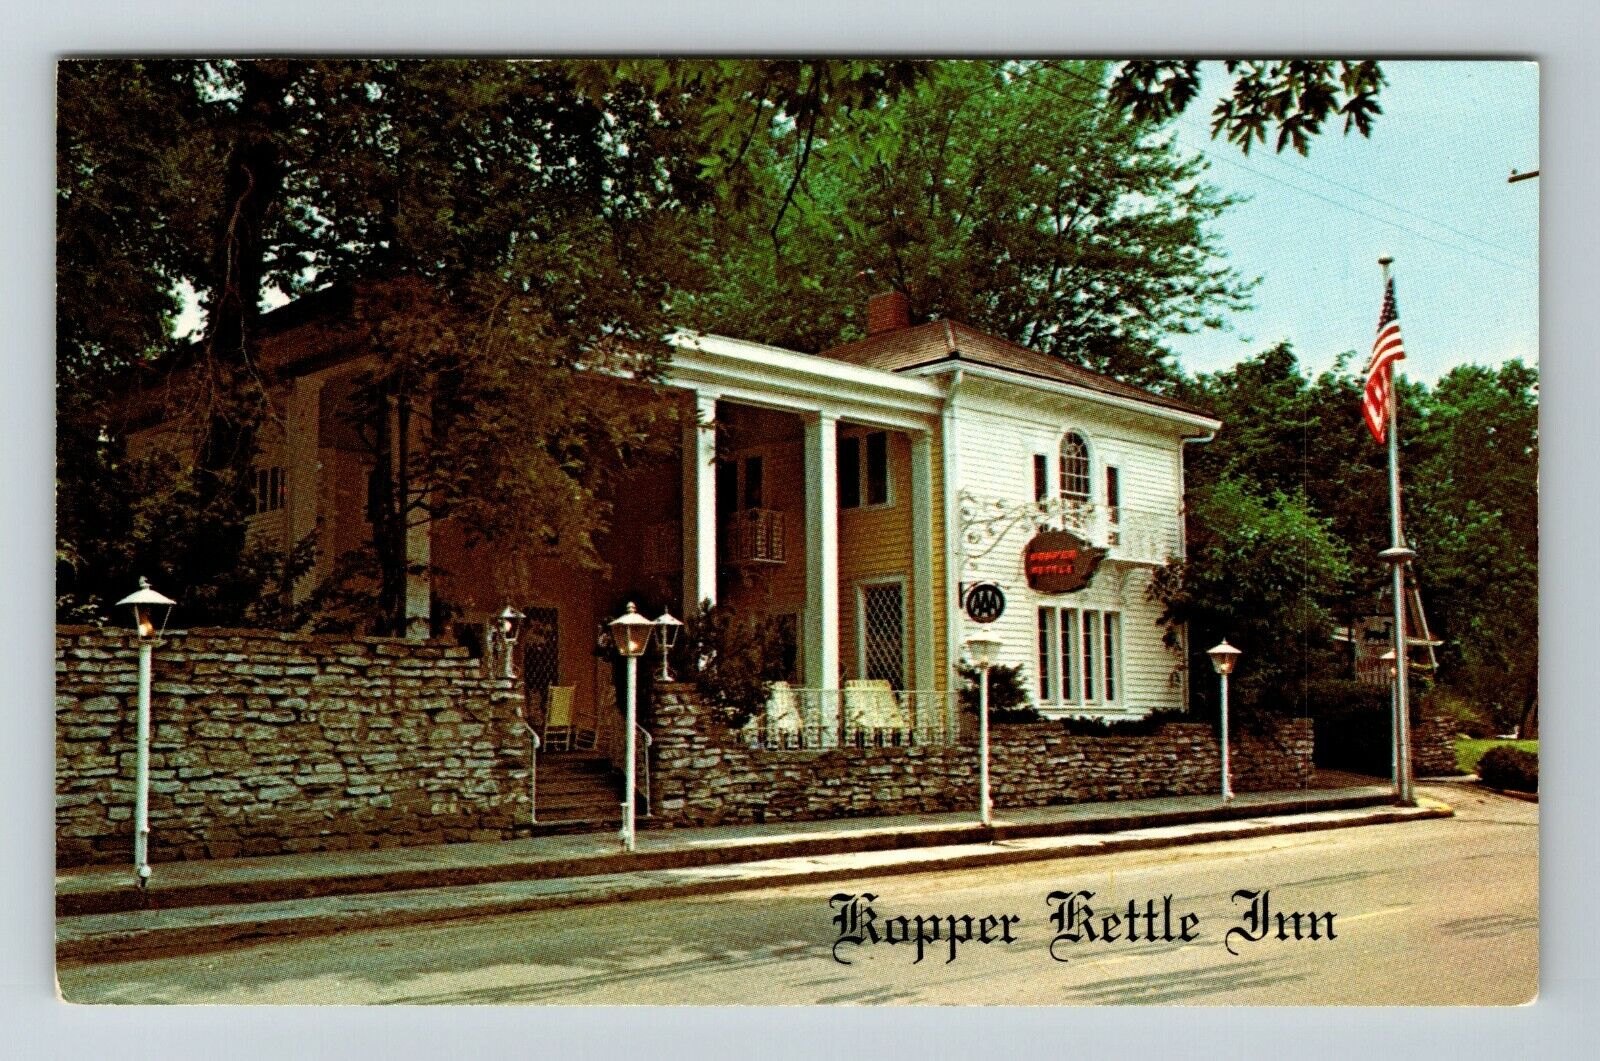 Morristown IN-Indiana, Kopper Kettle Inn, Exterior, Vintage Postcard